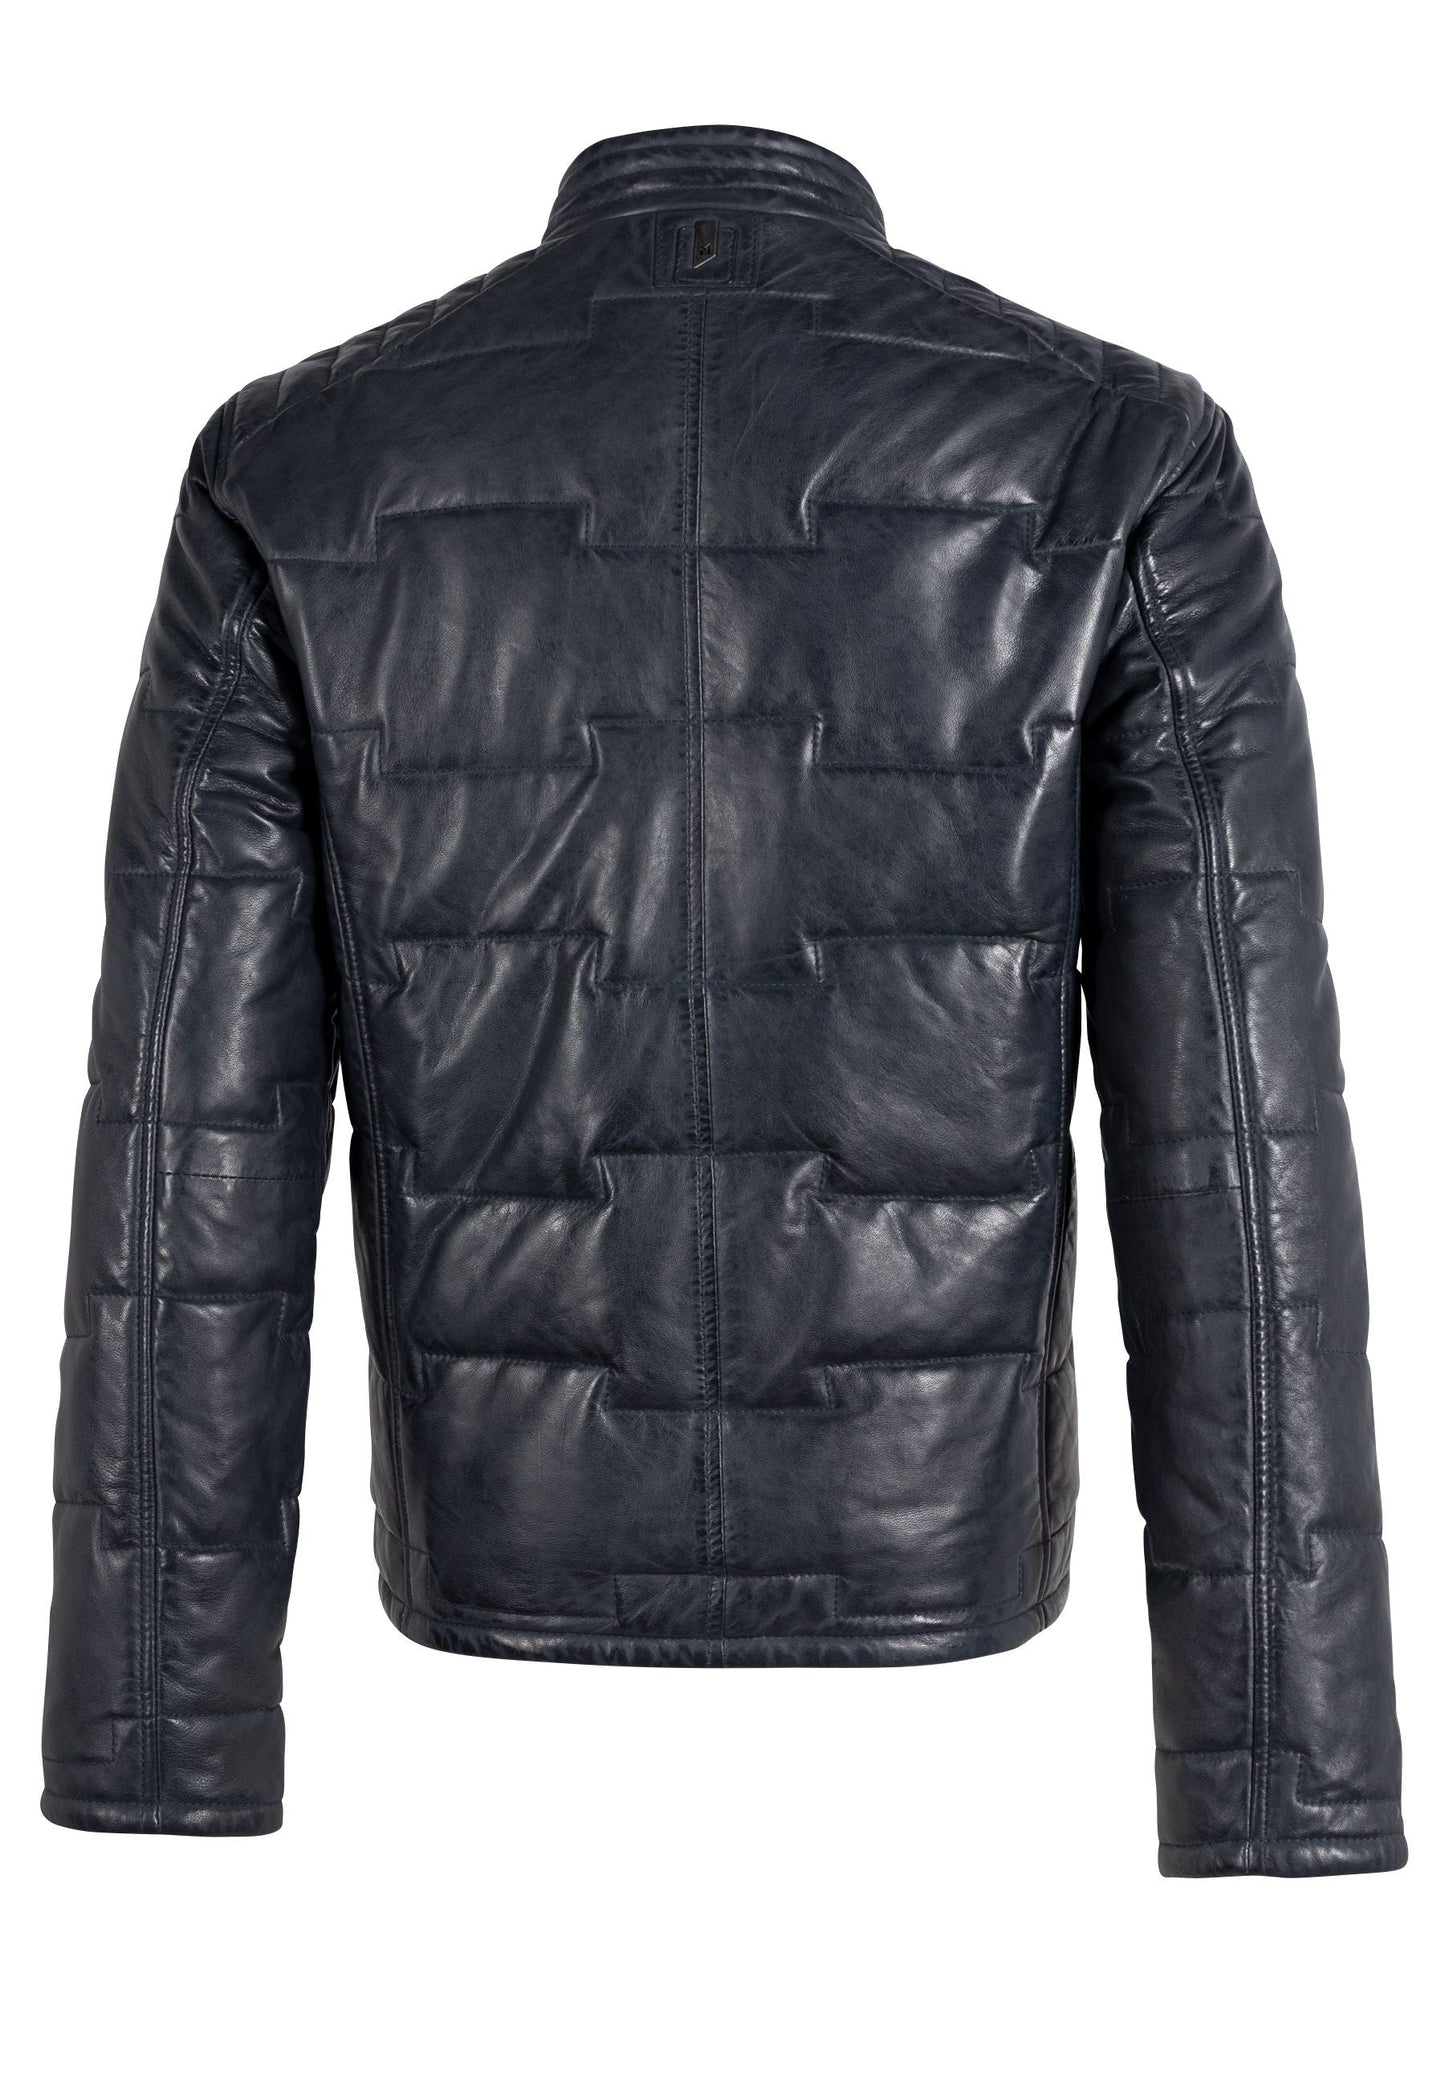 Aplin CF Leather Jacket, Navy